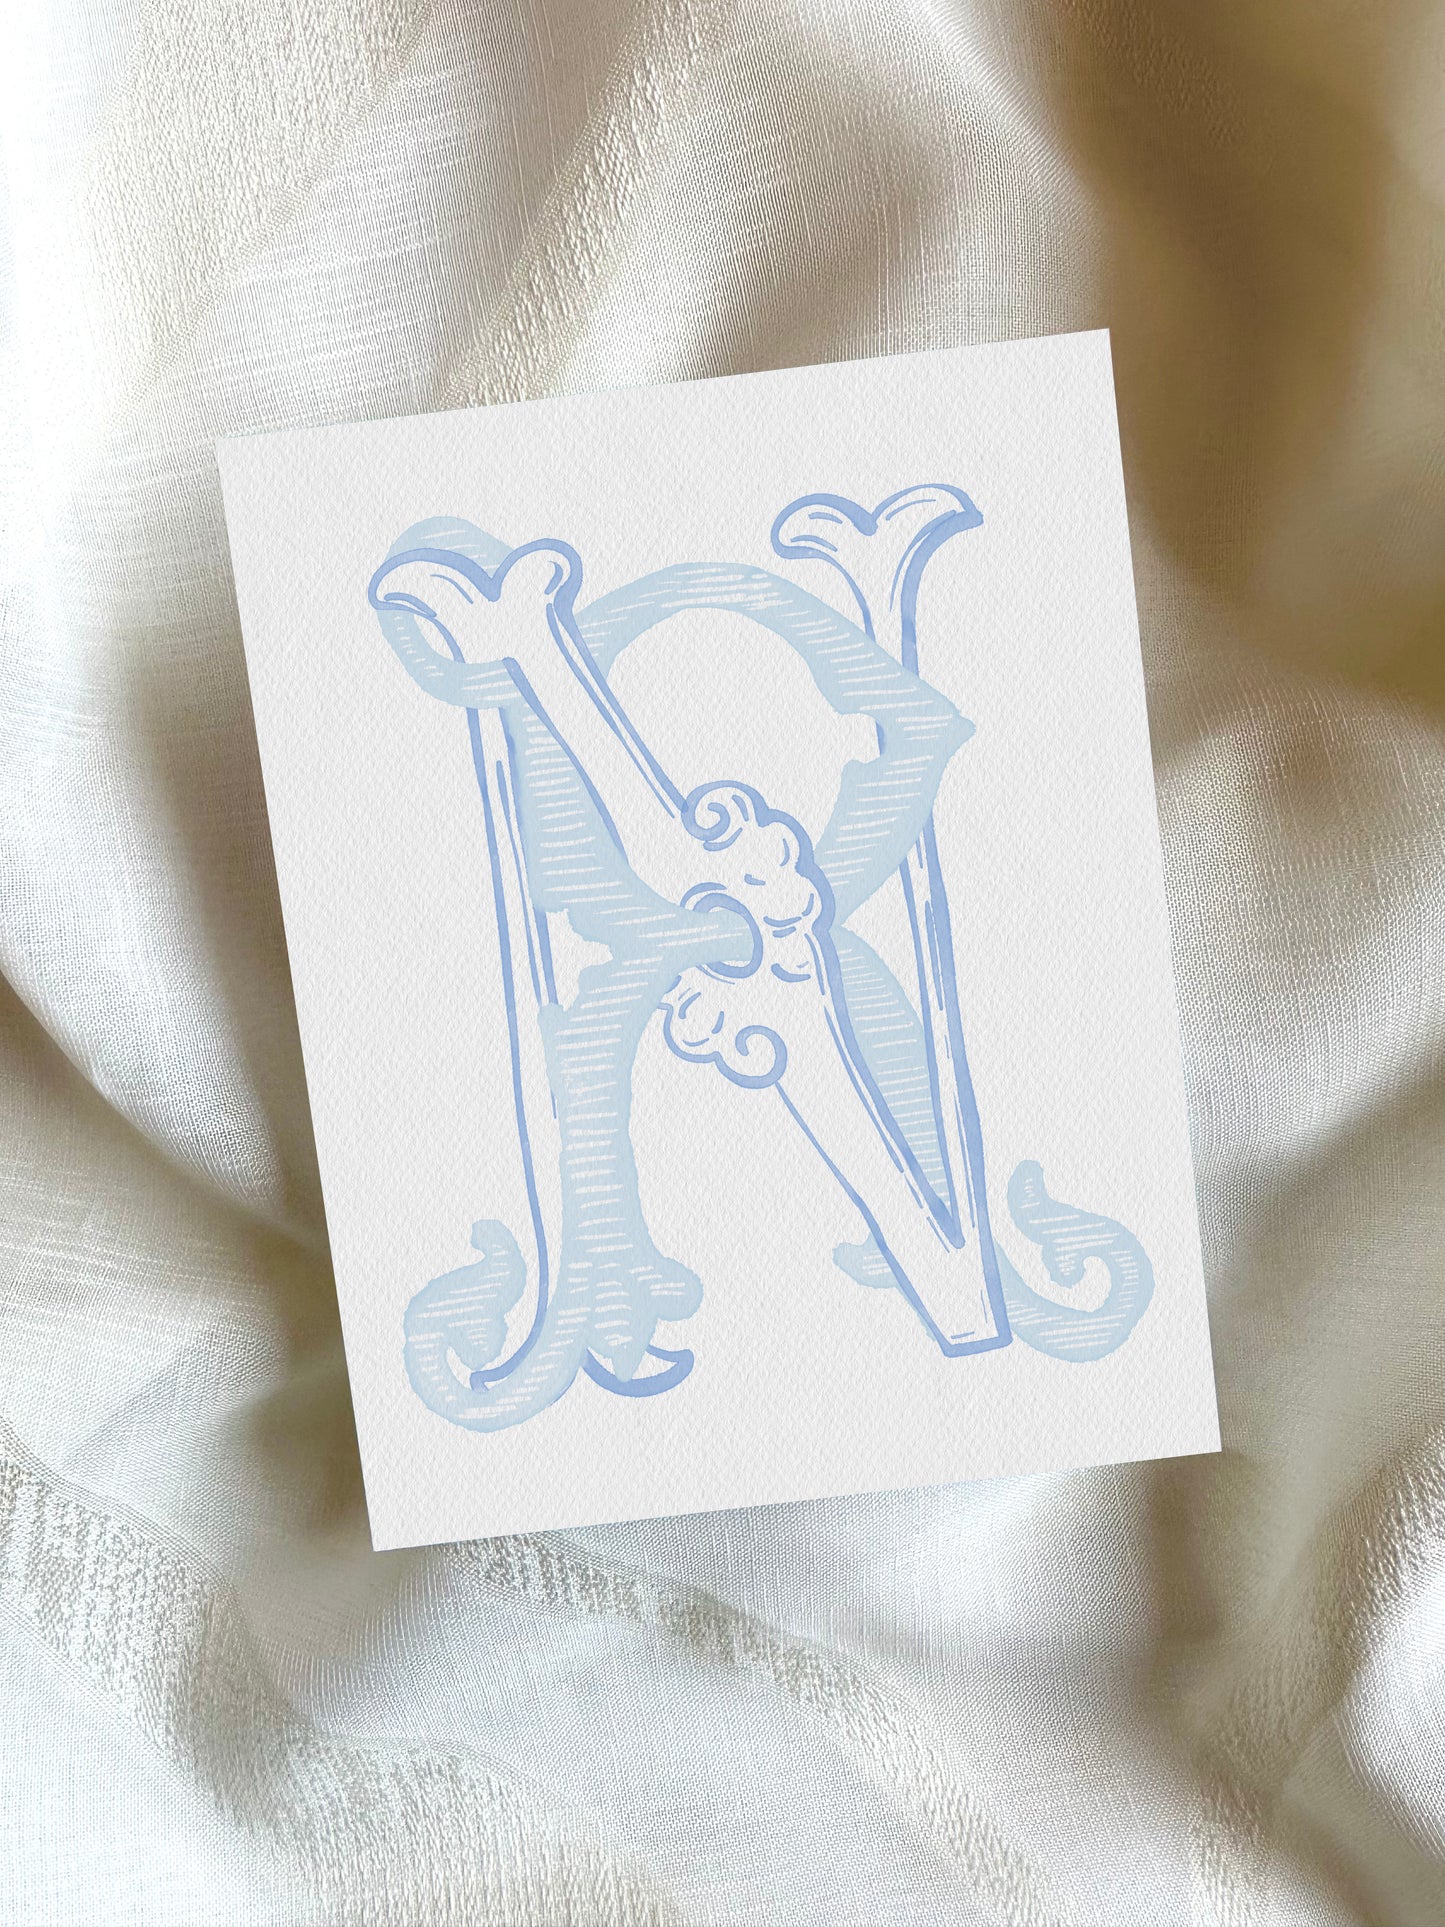 2 Letter Monogram with Letters NR RN | Digital Download - Wedding Monogram SVG, Personal Logo, Wedding Logo for Wedding Invitations The Wedding Crest Lab